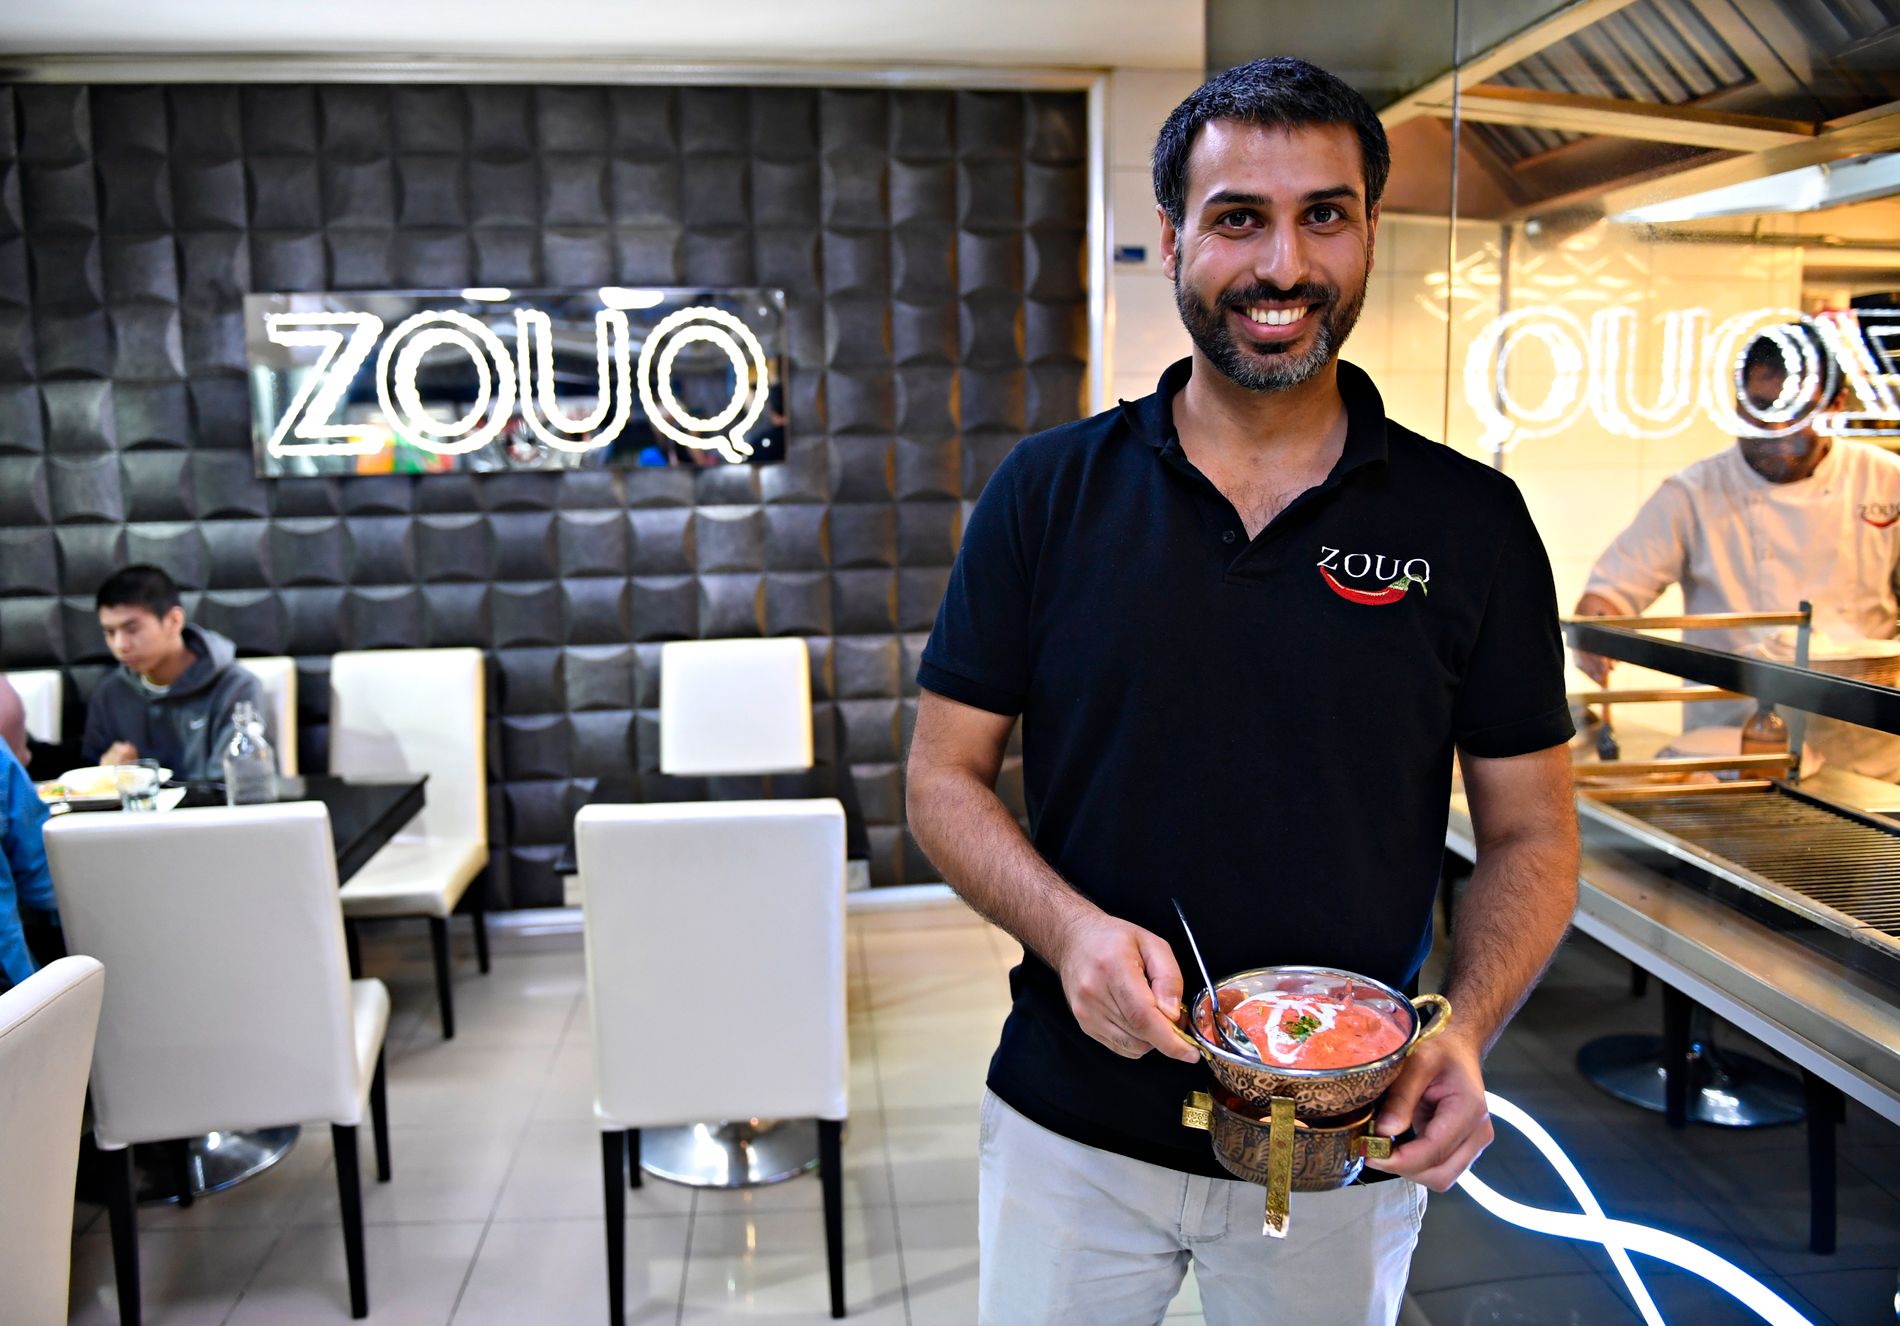  Daglig leder Rizwan Rafiq i den pakistanske restauranten Zouq.   